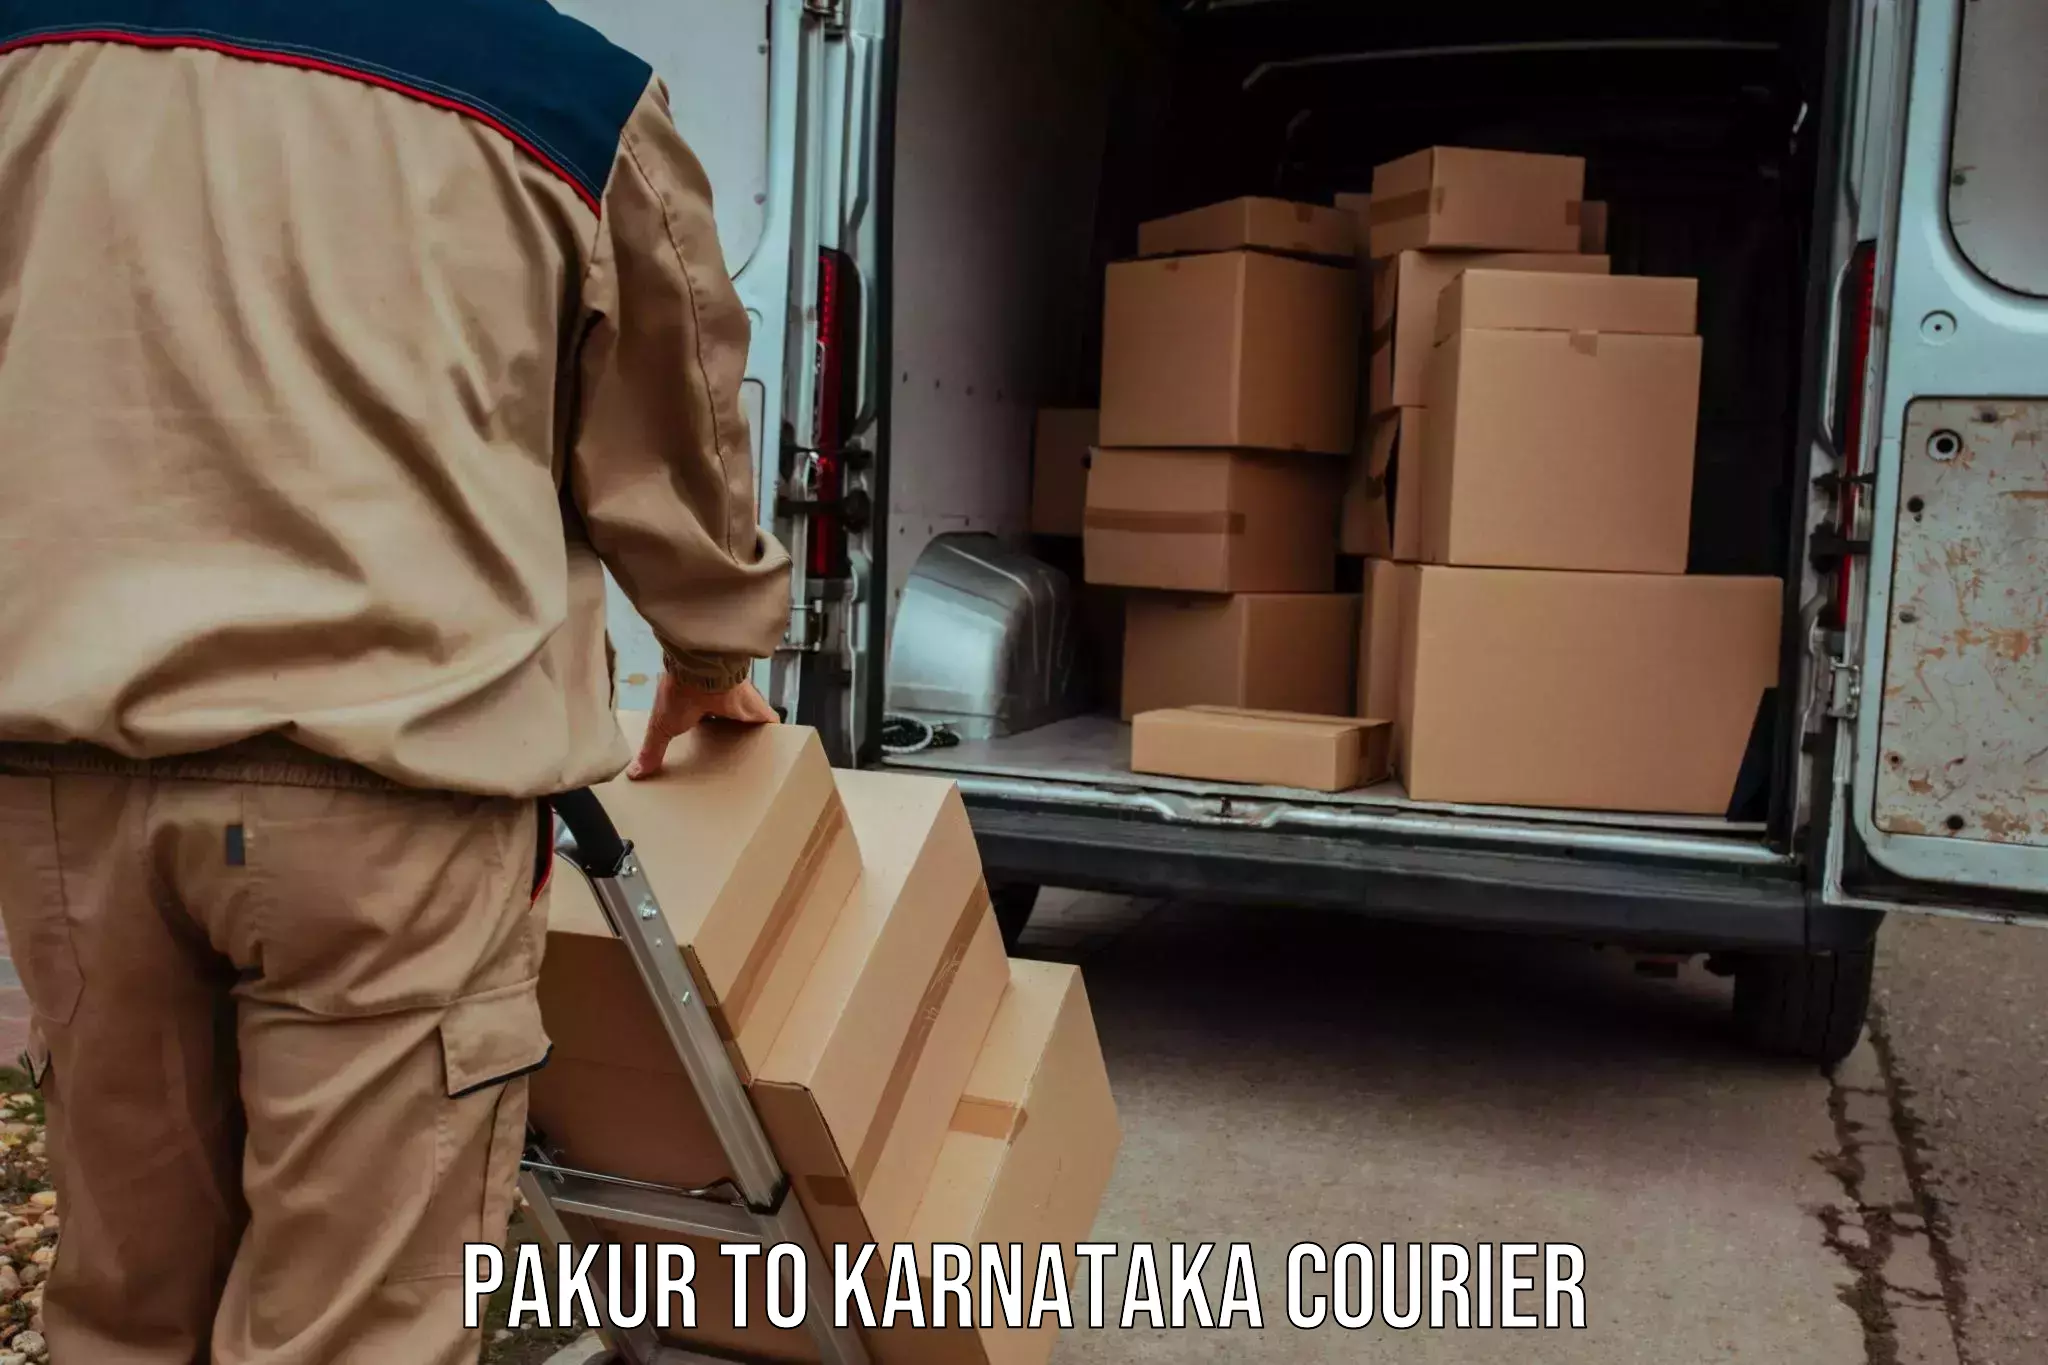 Global logistics network Pakur to Karnataka